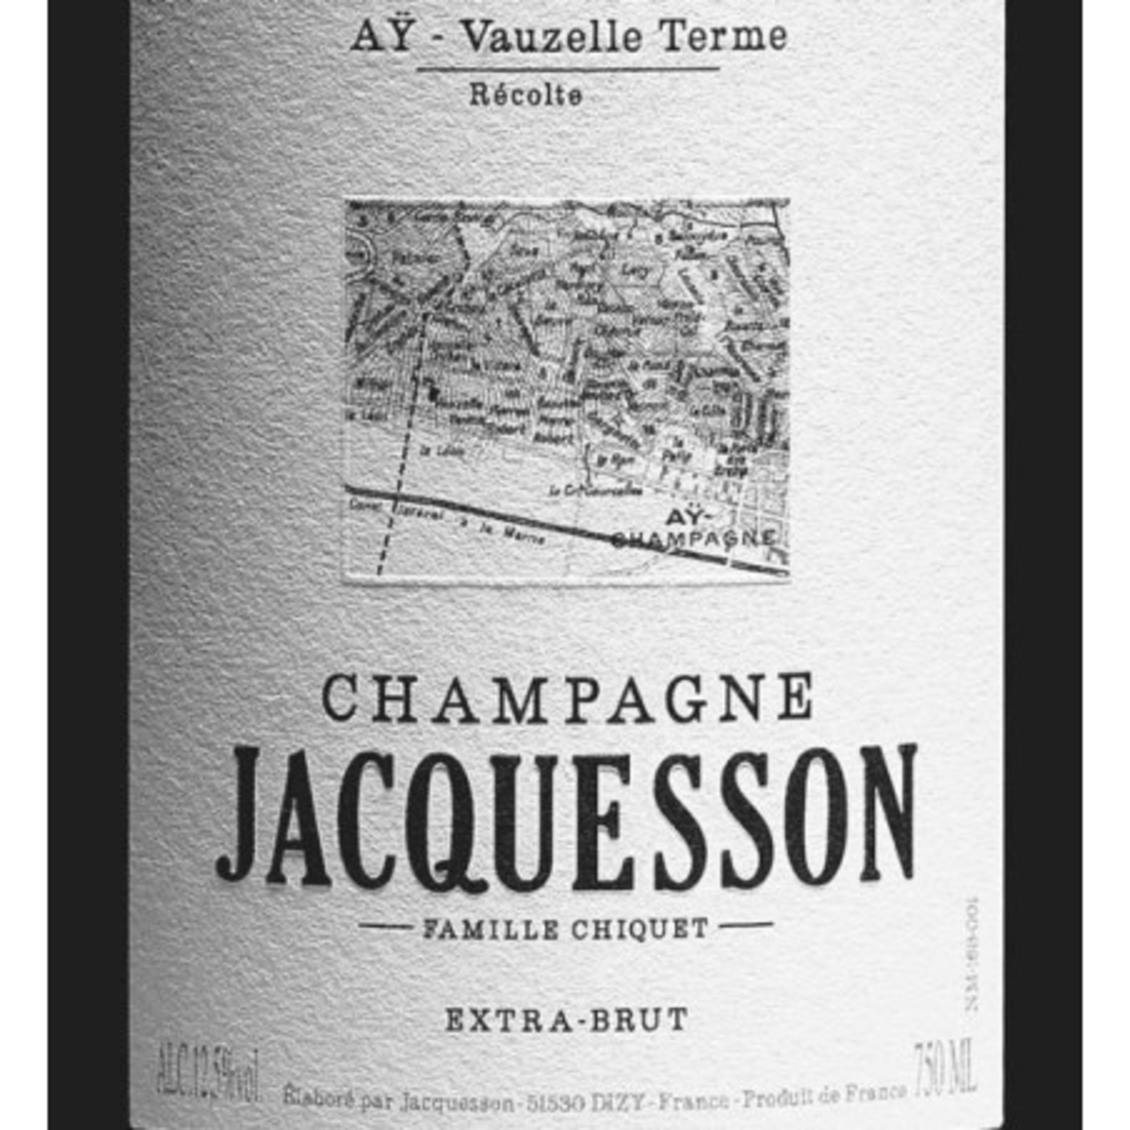 champagne-jacquesson-ay-vauzelle-terme-2013